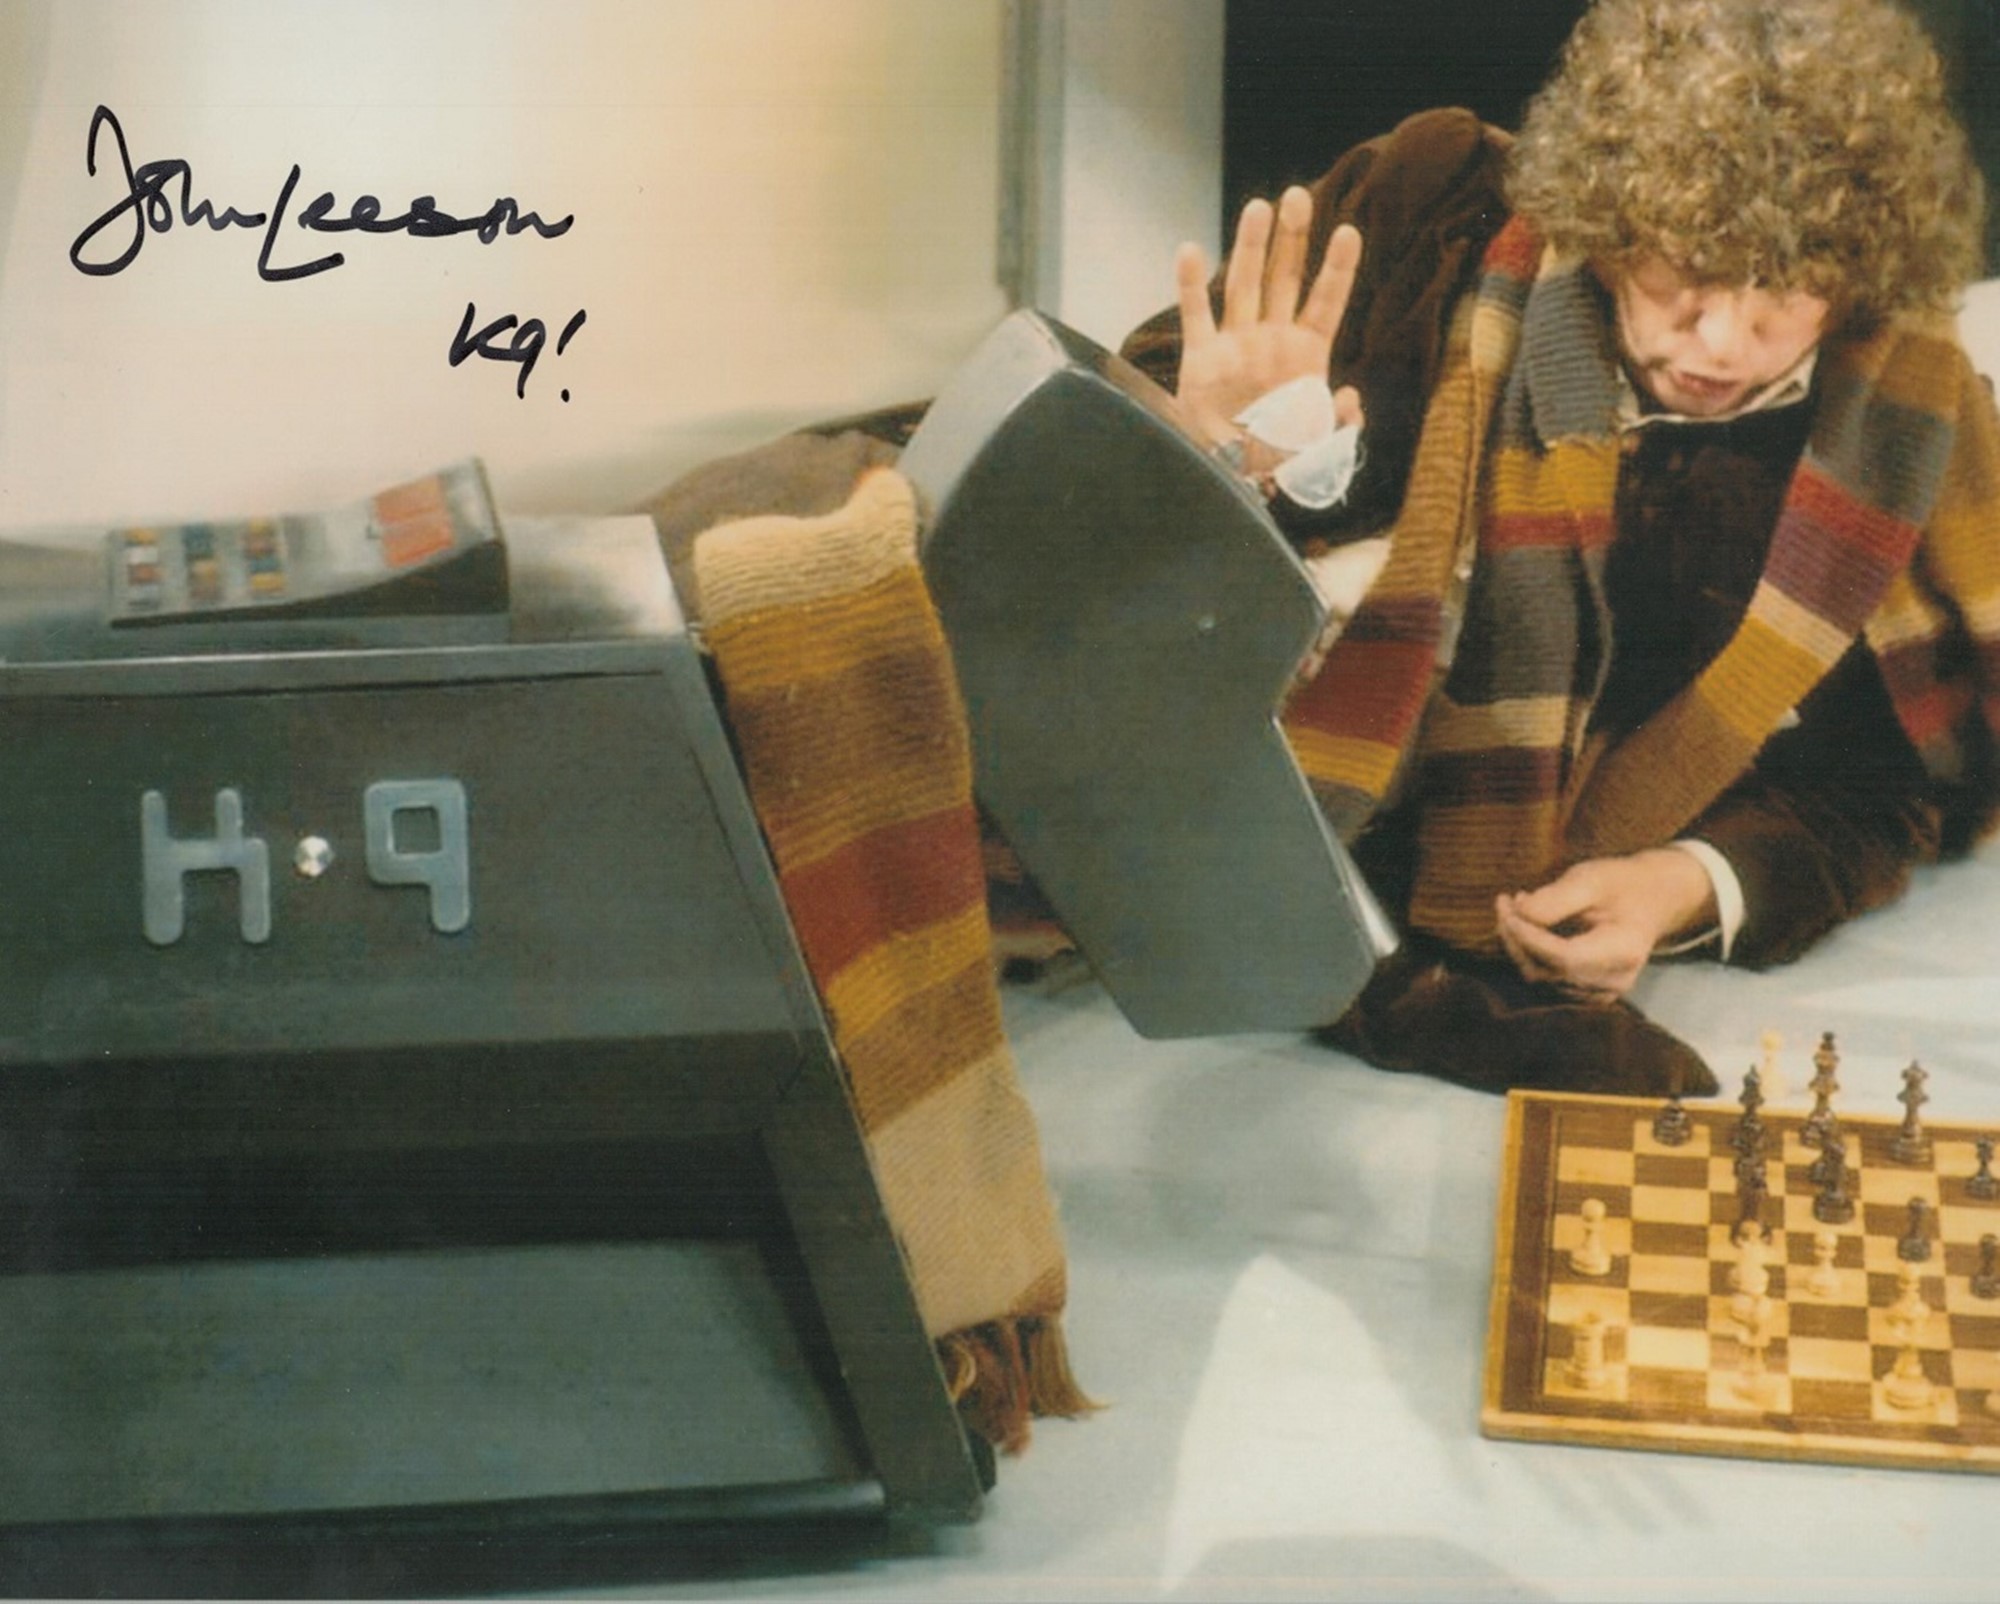 John Leeson signed K9 Dr Who 10x8 photo. Leeson (born John Francis Christopher Ducker; 16 March